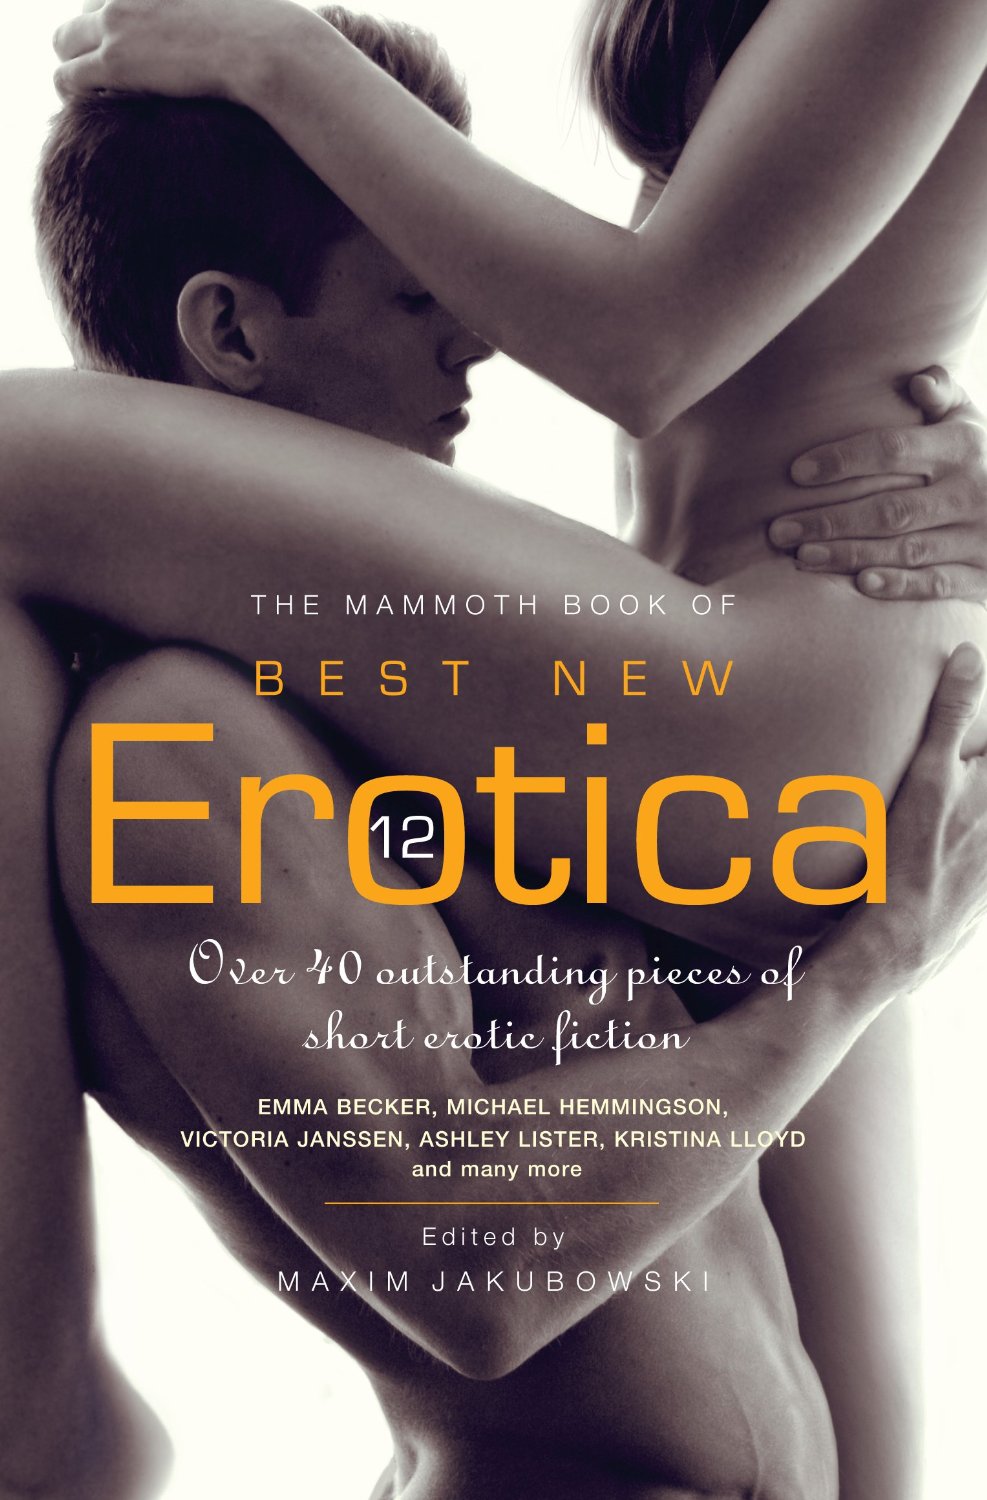 Erotica for women free online literature photo photo